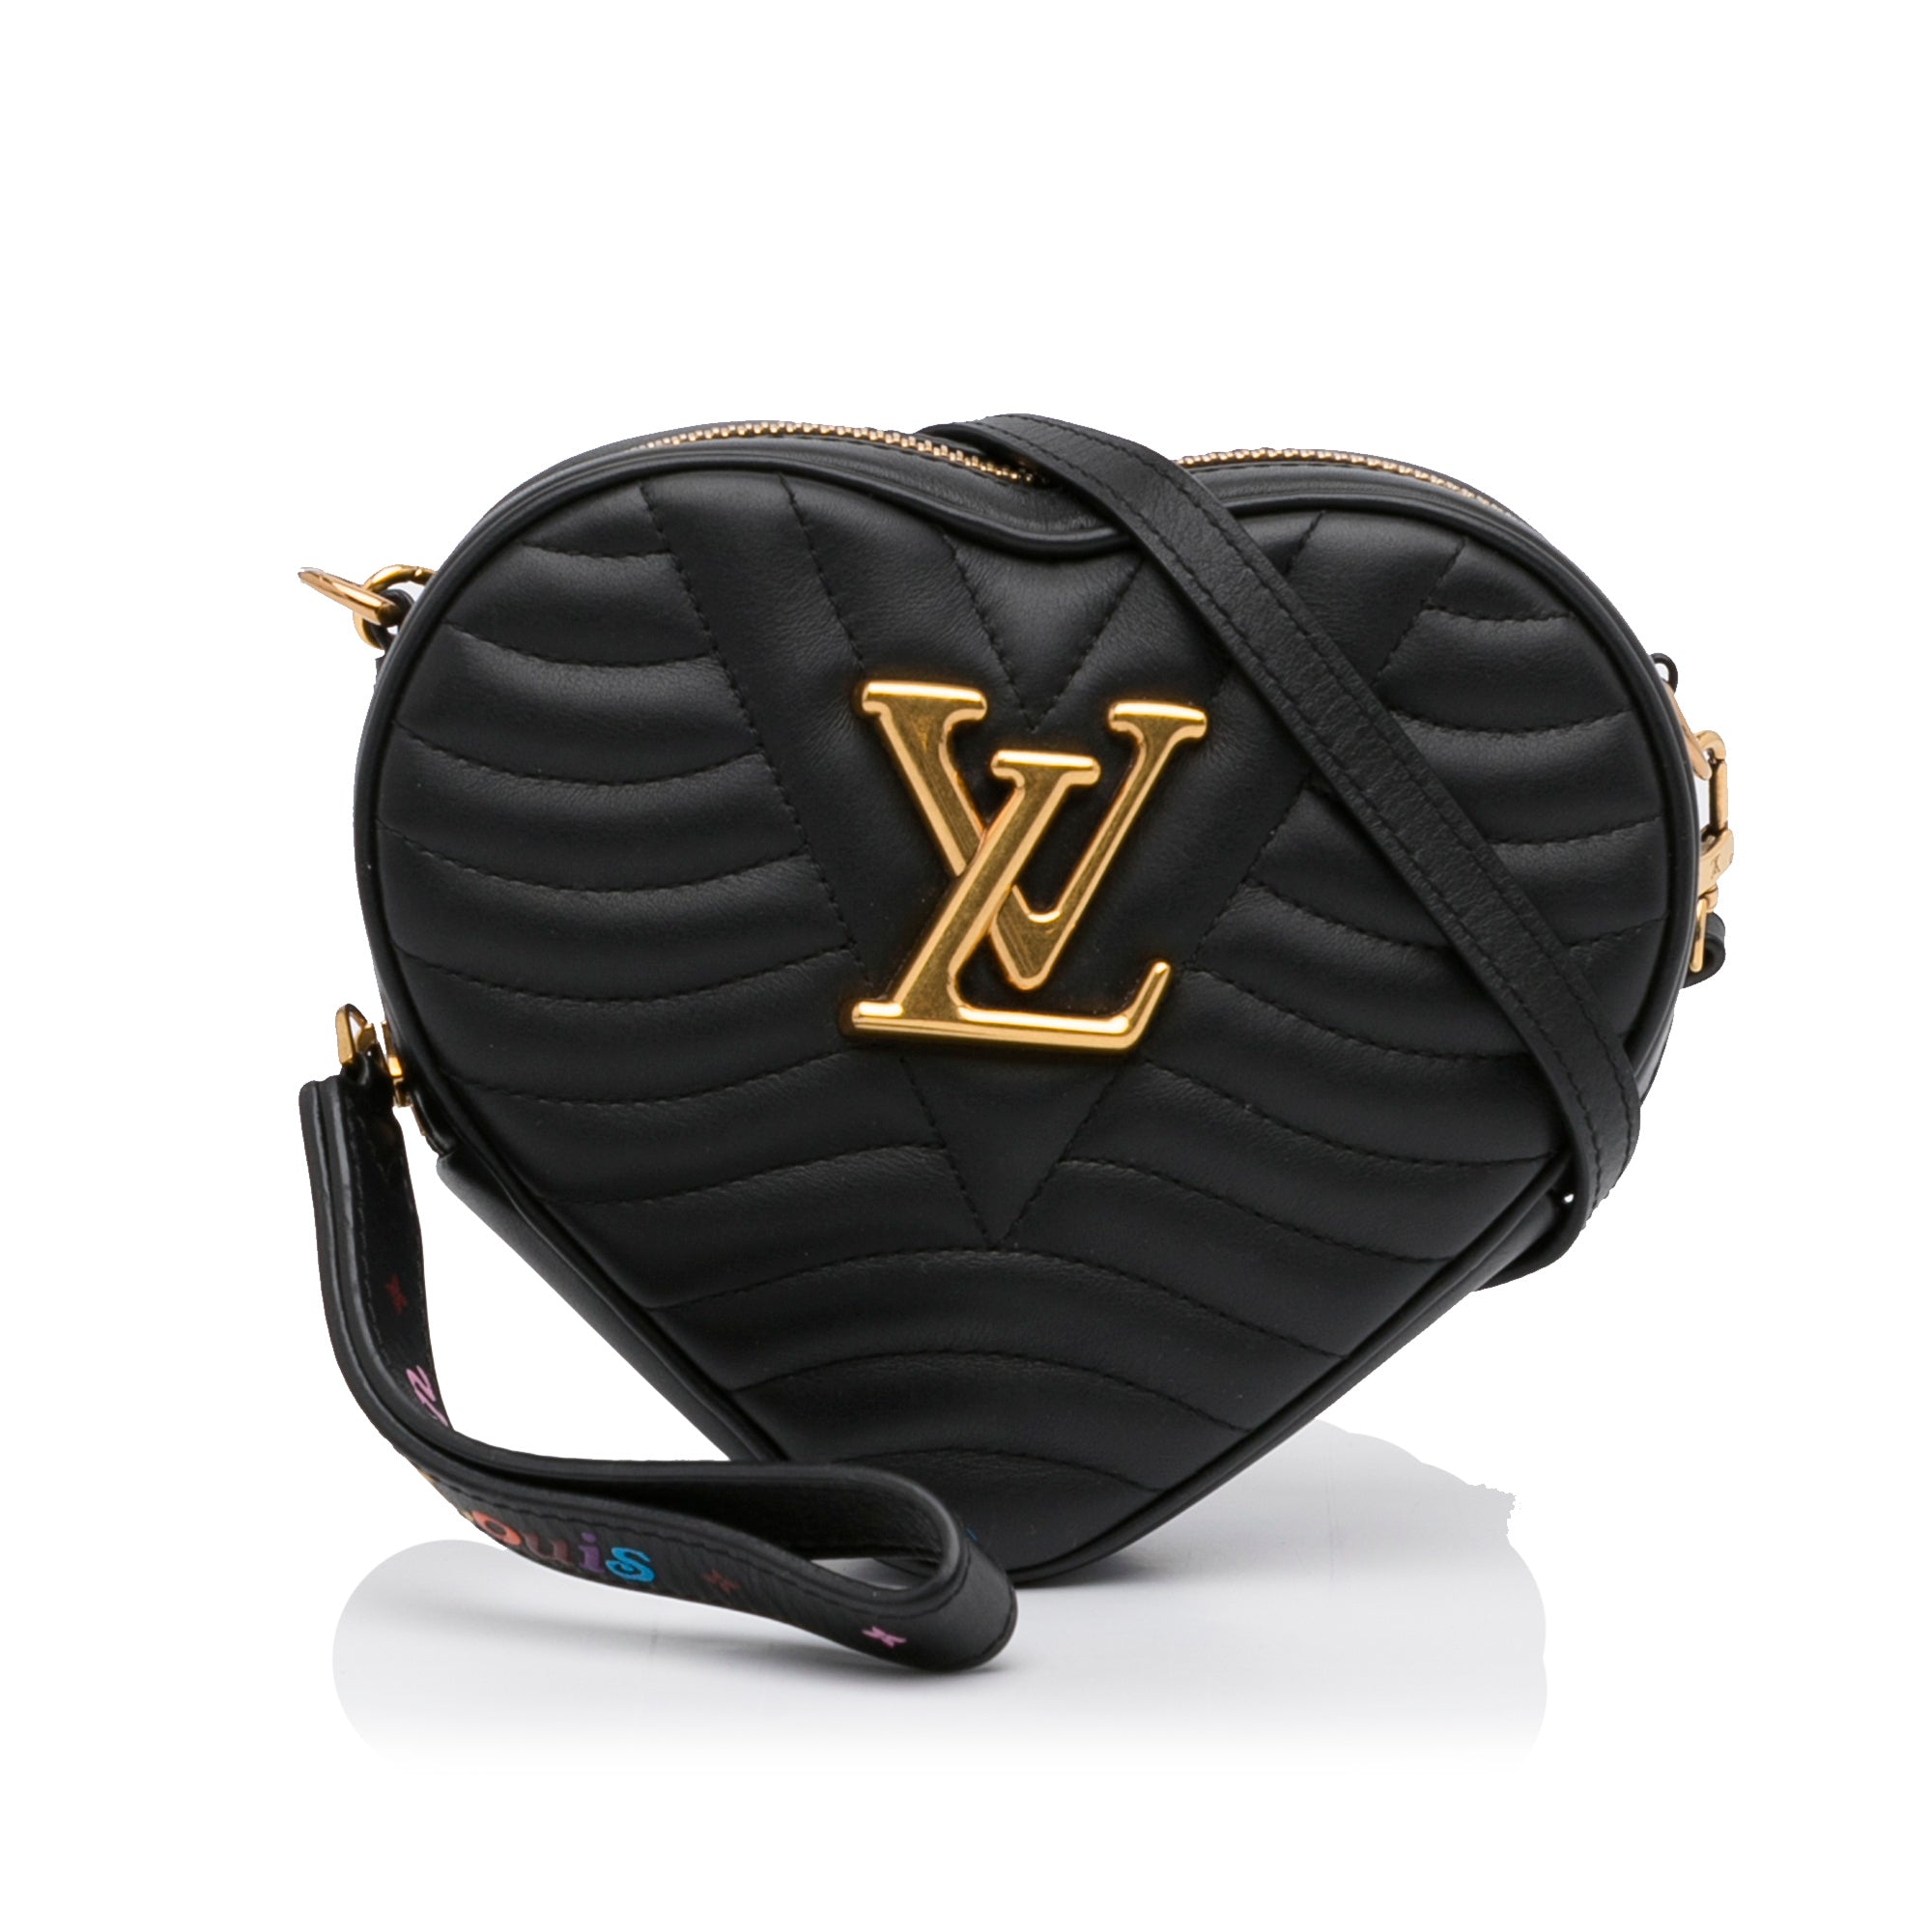 Pack - Vuitton - Monogram - Louis - louis vuitton new wave heart